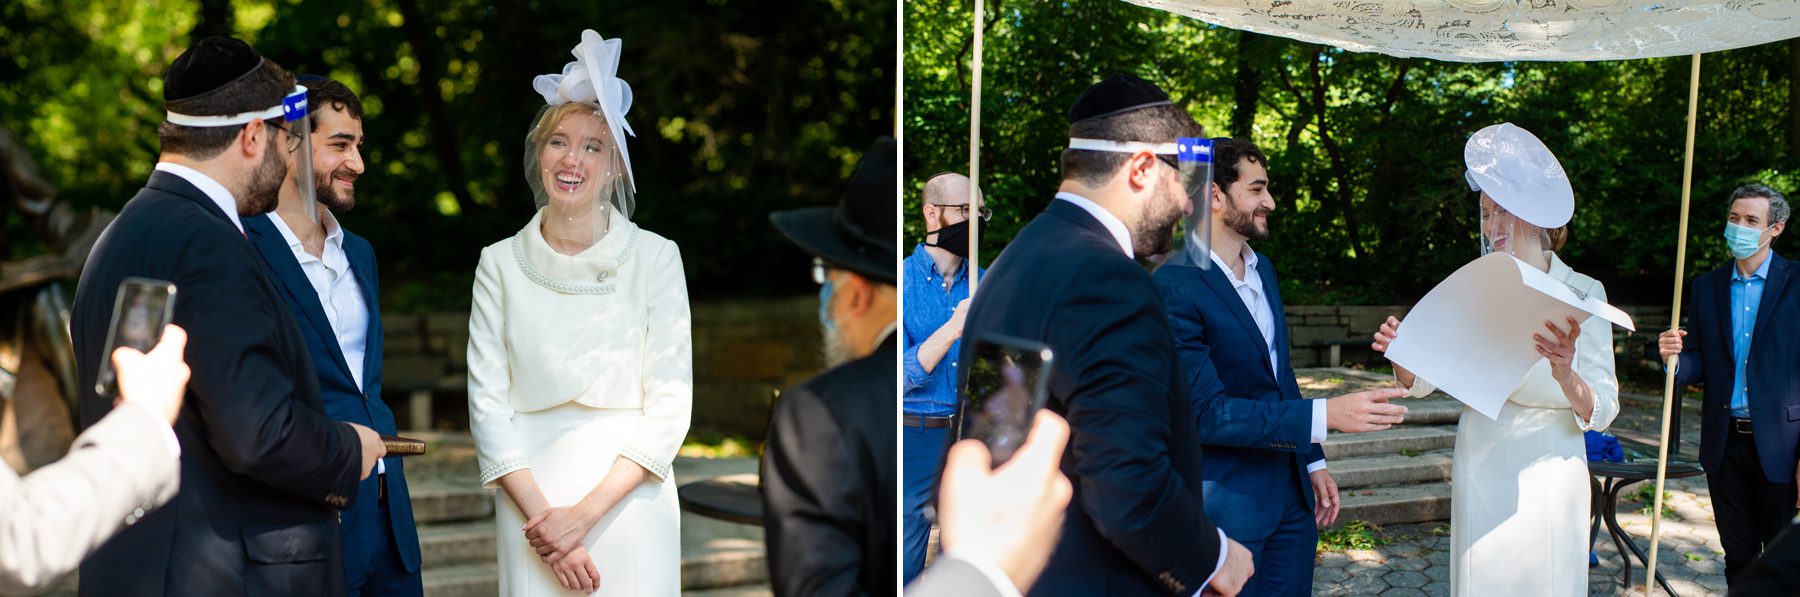 Ketubah Presentation in Jewish Wedding Ceremony 